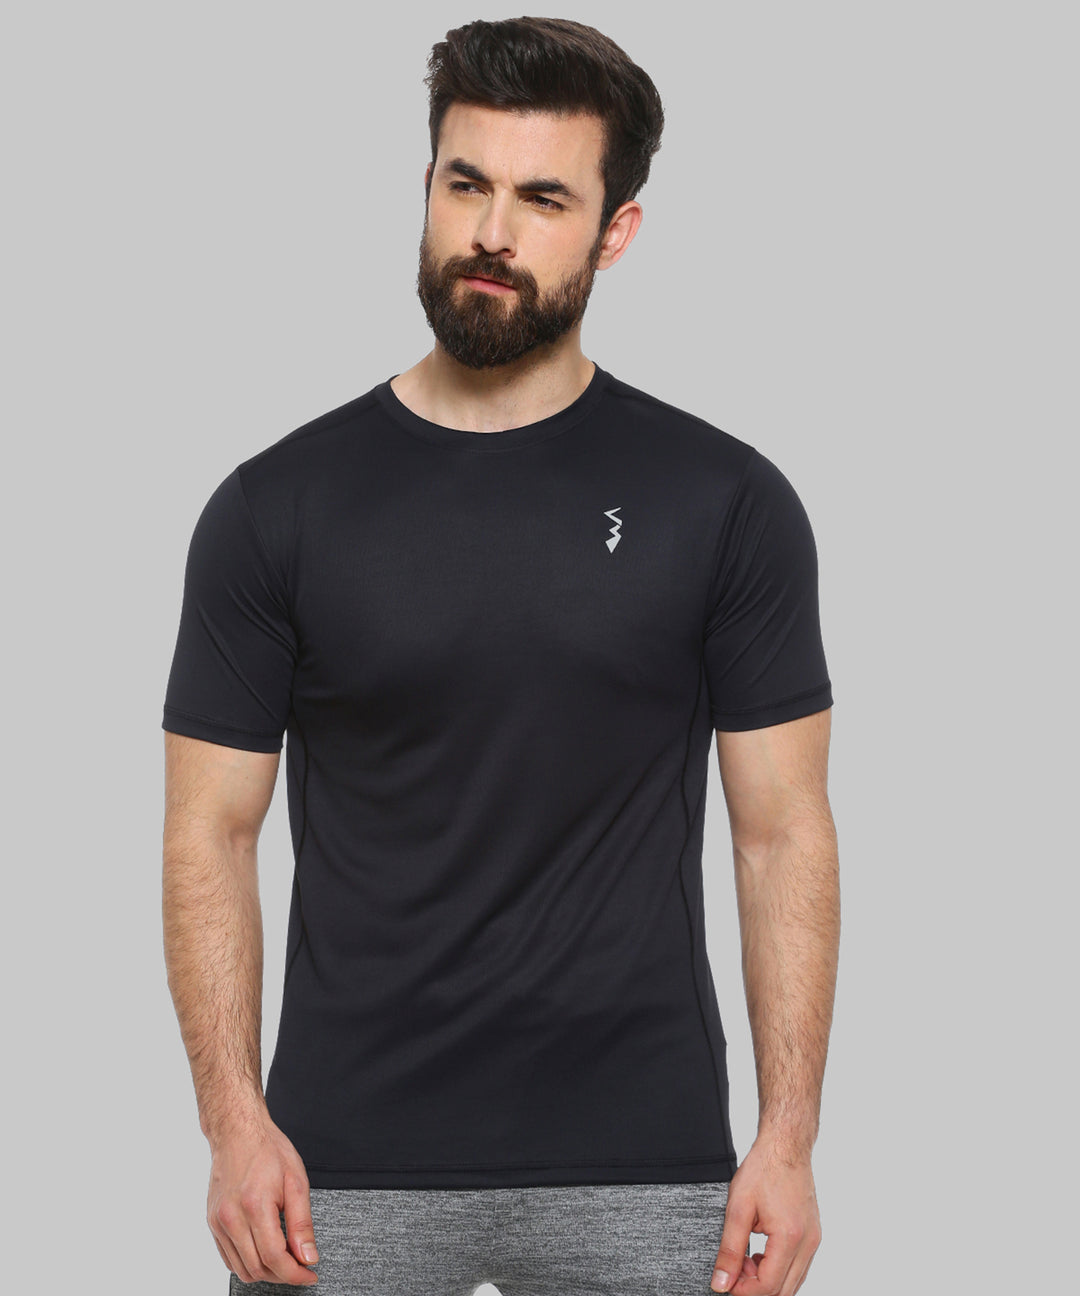 Black Men Solid Polyester Sports Tshirt Round Neck